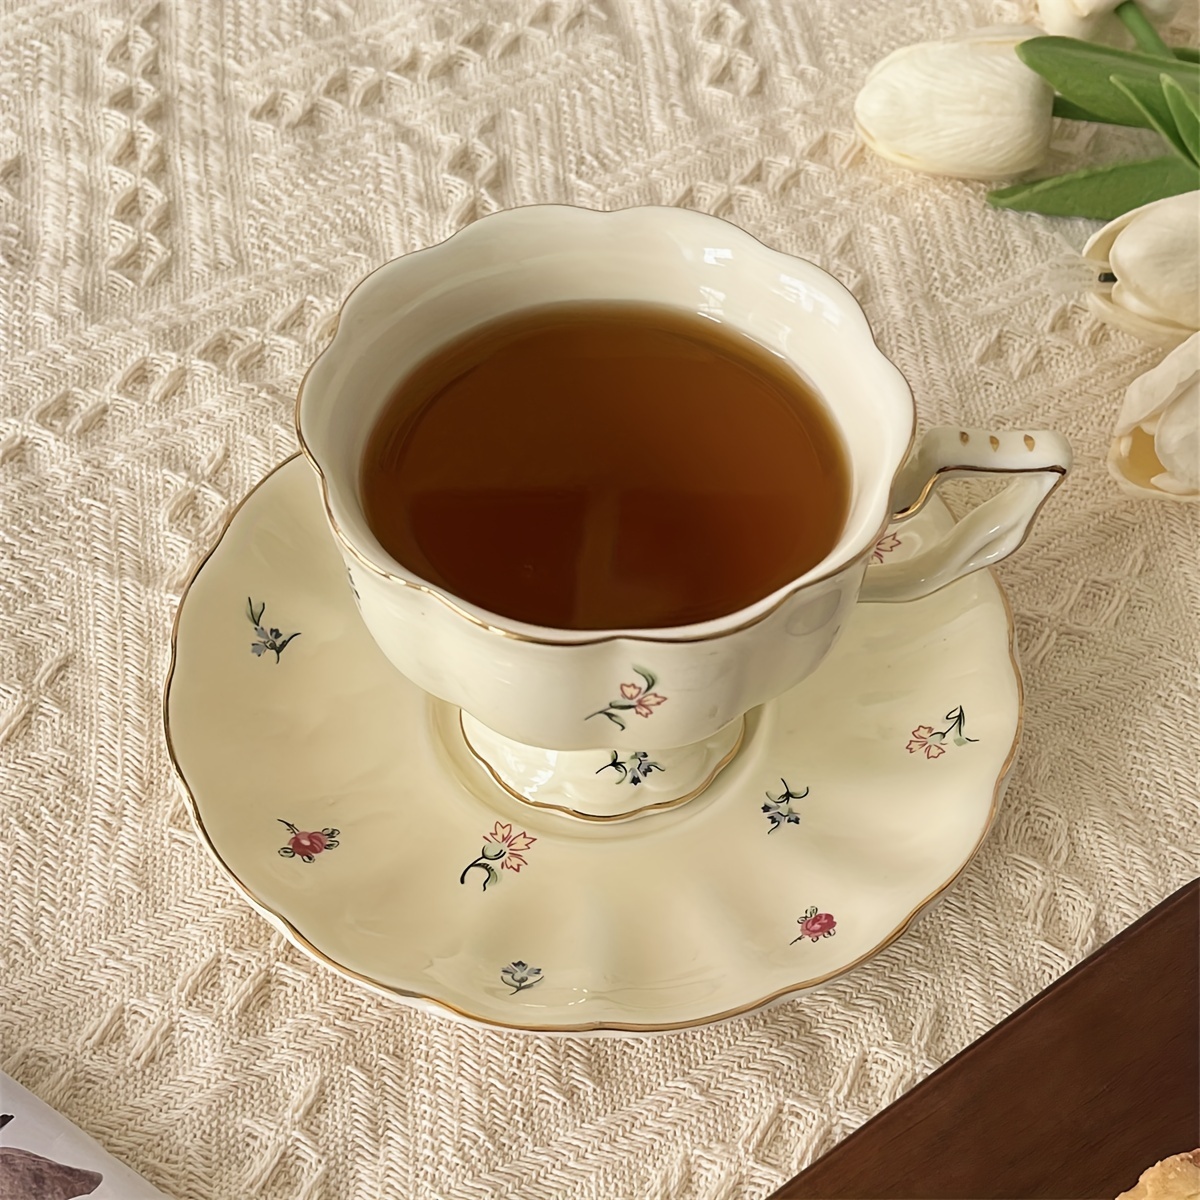 

1pc Floral Ceramic Cup And Saucer Set, Luxury Tea Coffee Set, Vintage Afternoon Tea Drinking, Elegant Tableware Decor